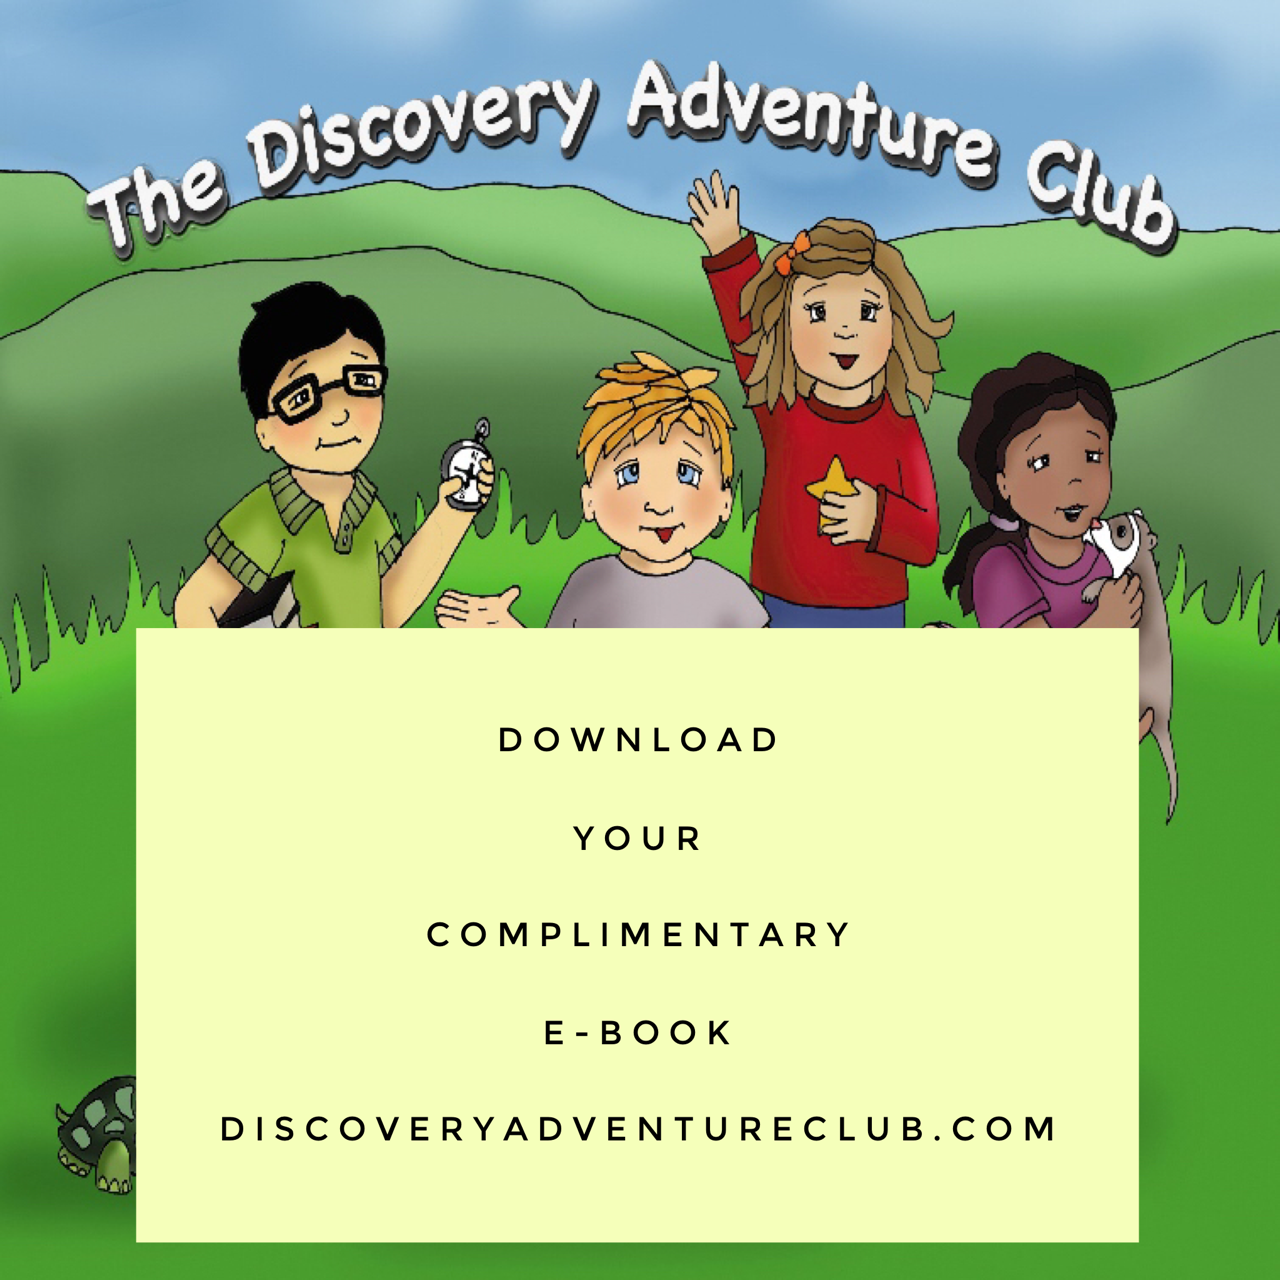 Discovery Adventure Club